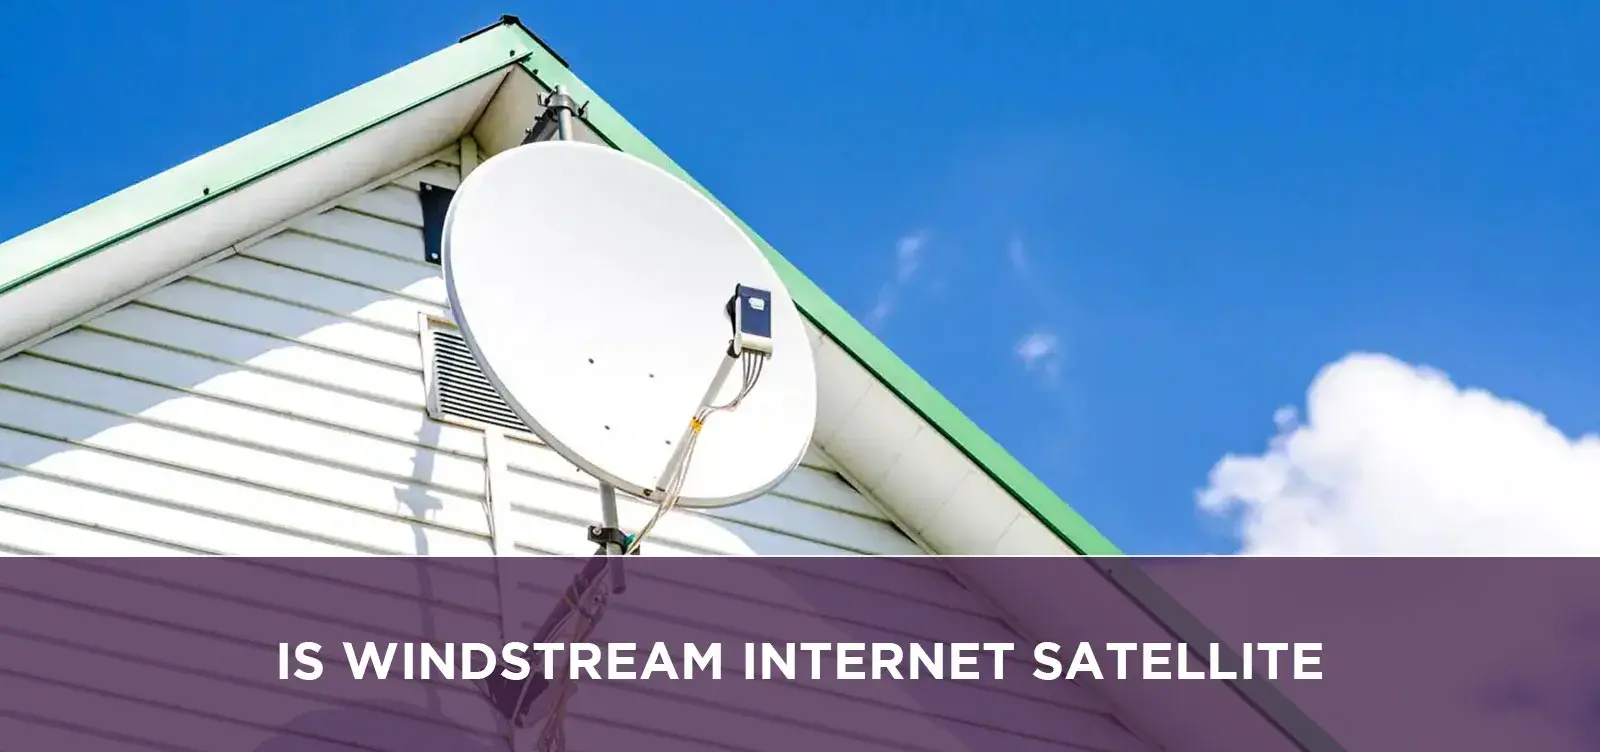 Is Windstream Internet Satellite?